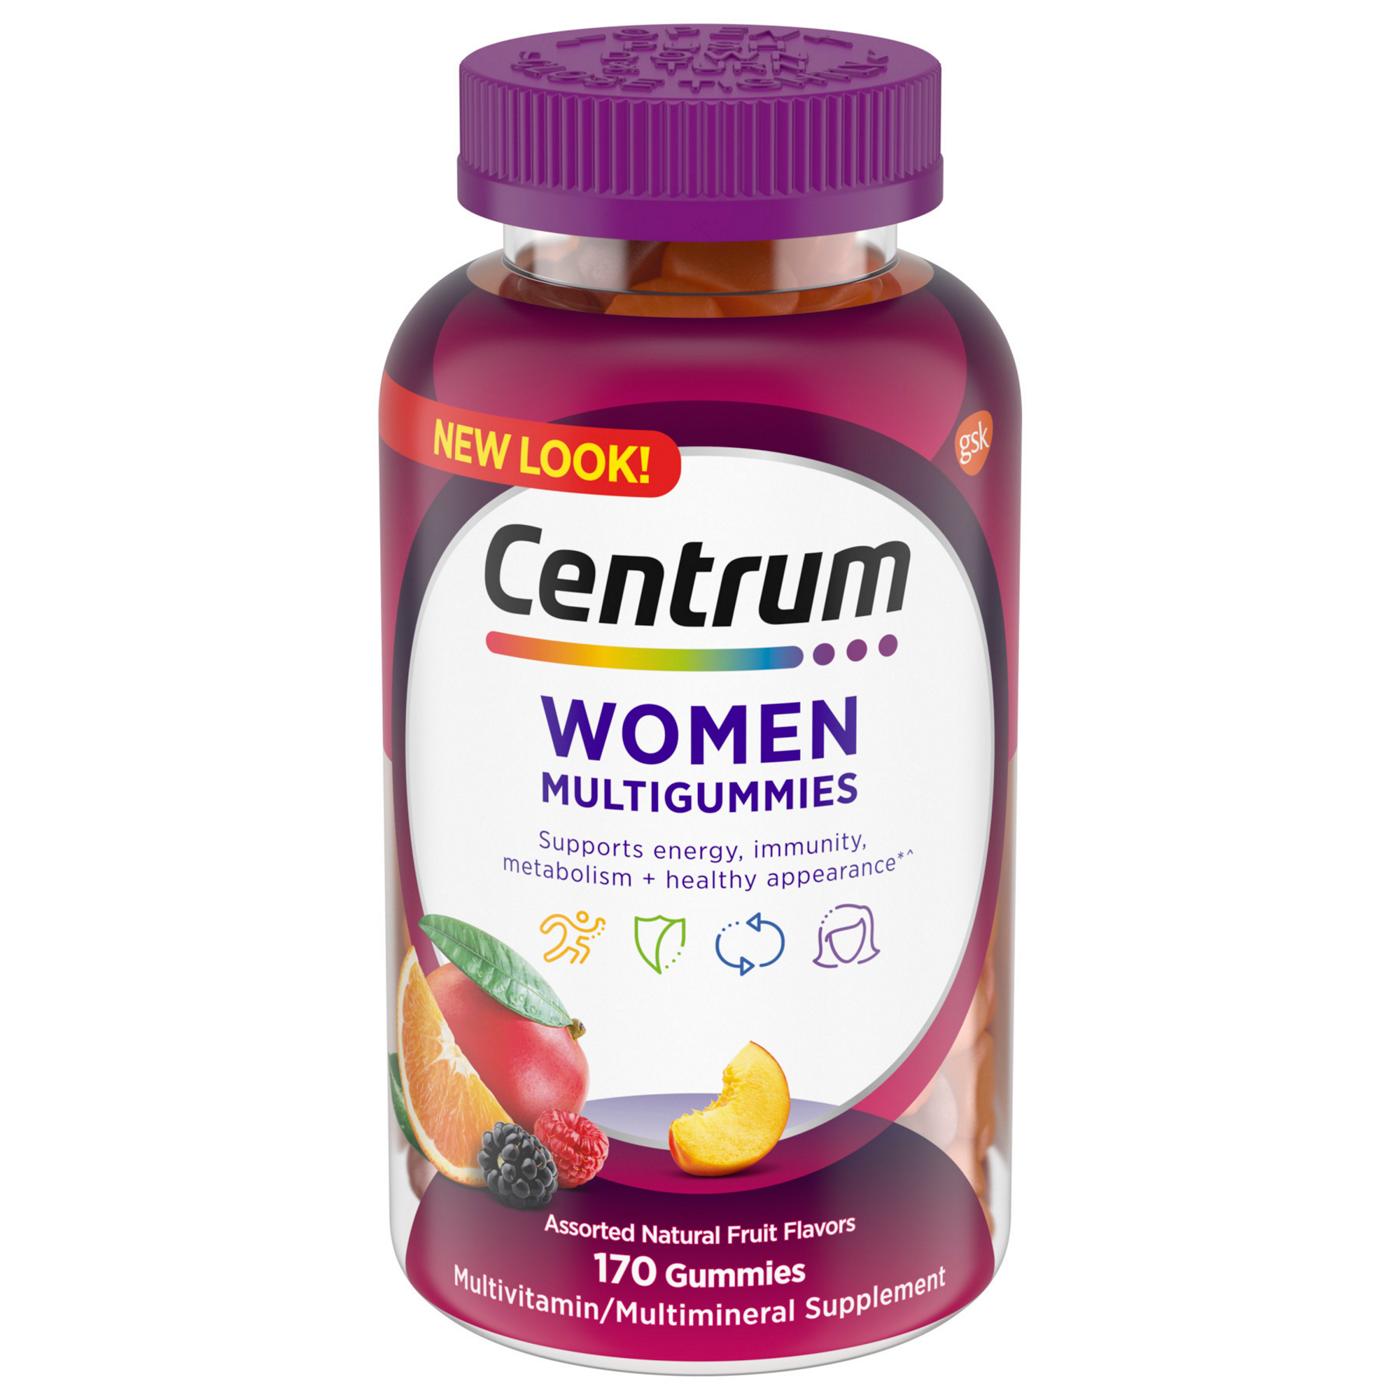 Centrum Multigummies Gummy Multivitamin For Women; image 1 of 7